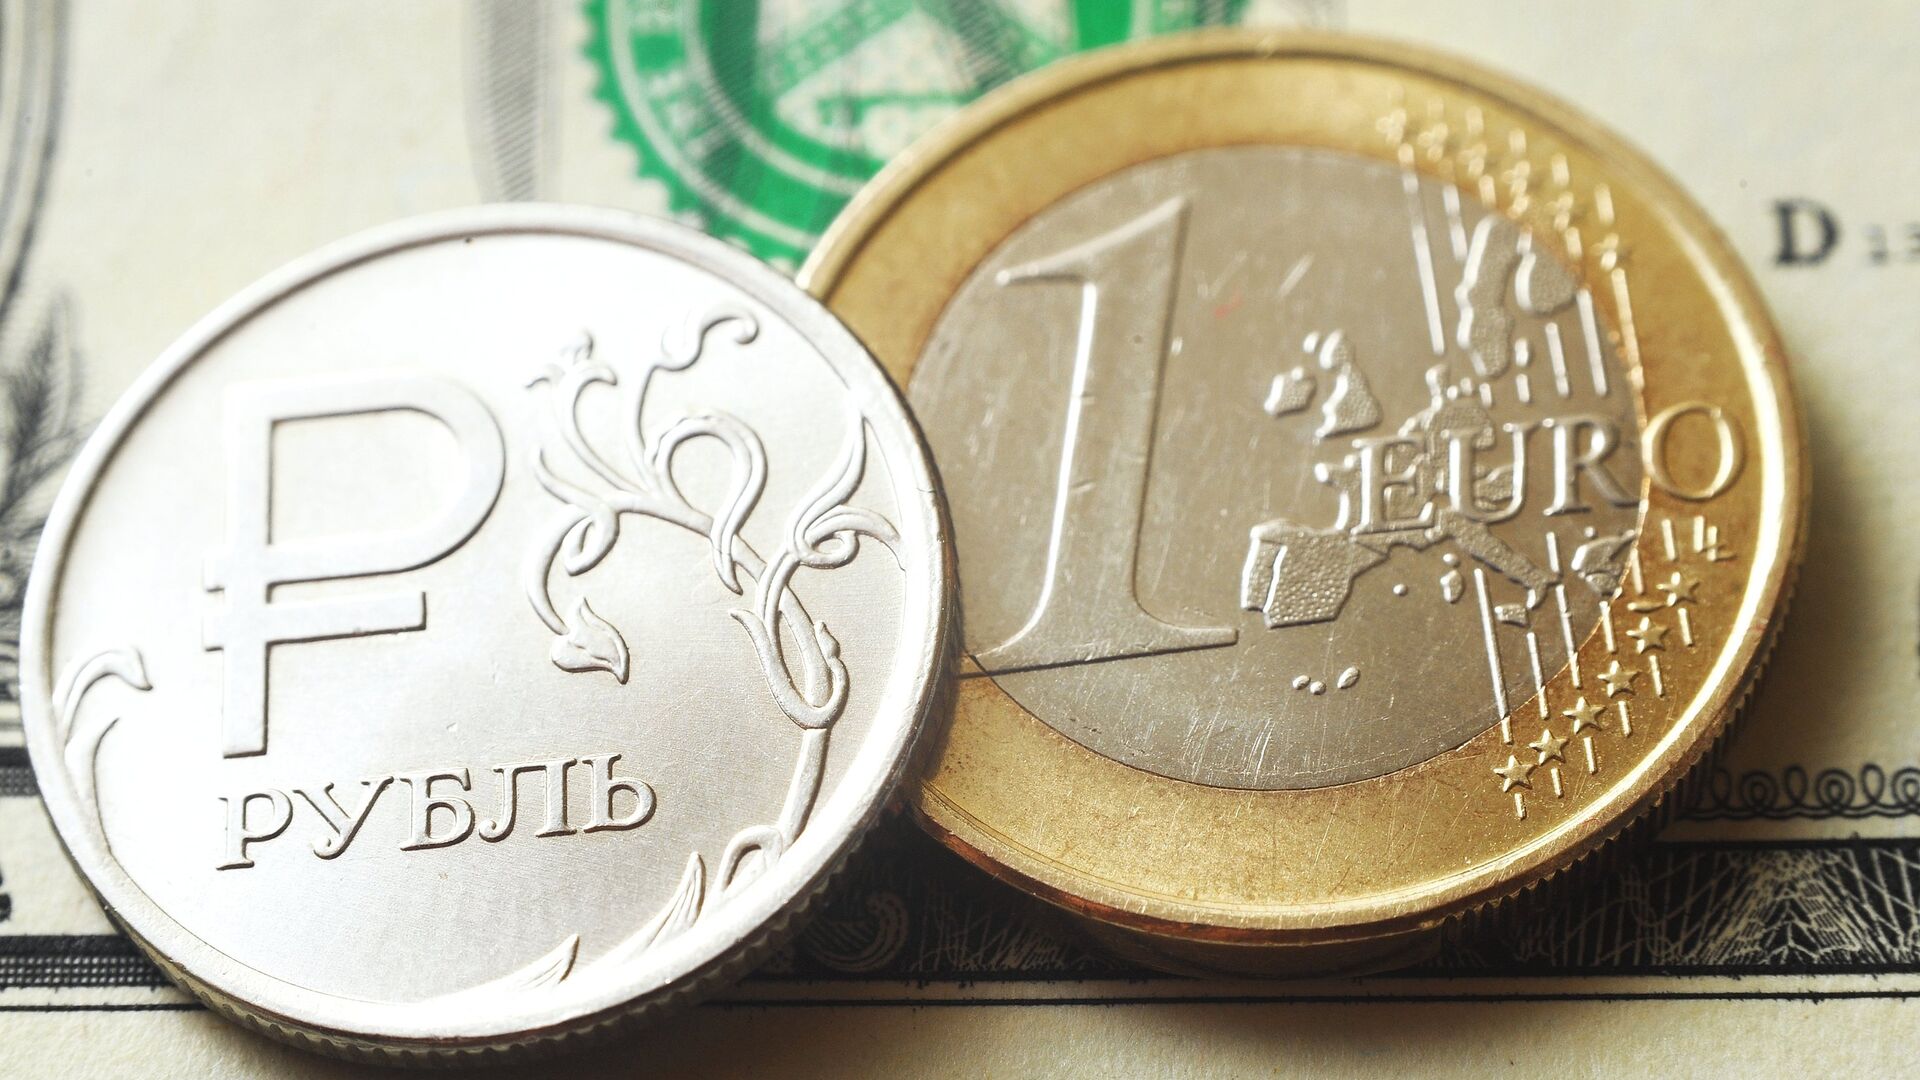 Монеты номиналом один рубль, один евро на банкноте один доллар США - РИА Новости, 1920, 05.11.2020